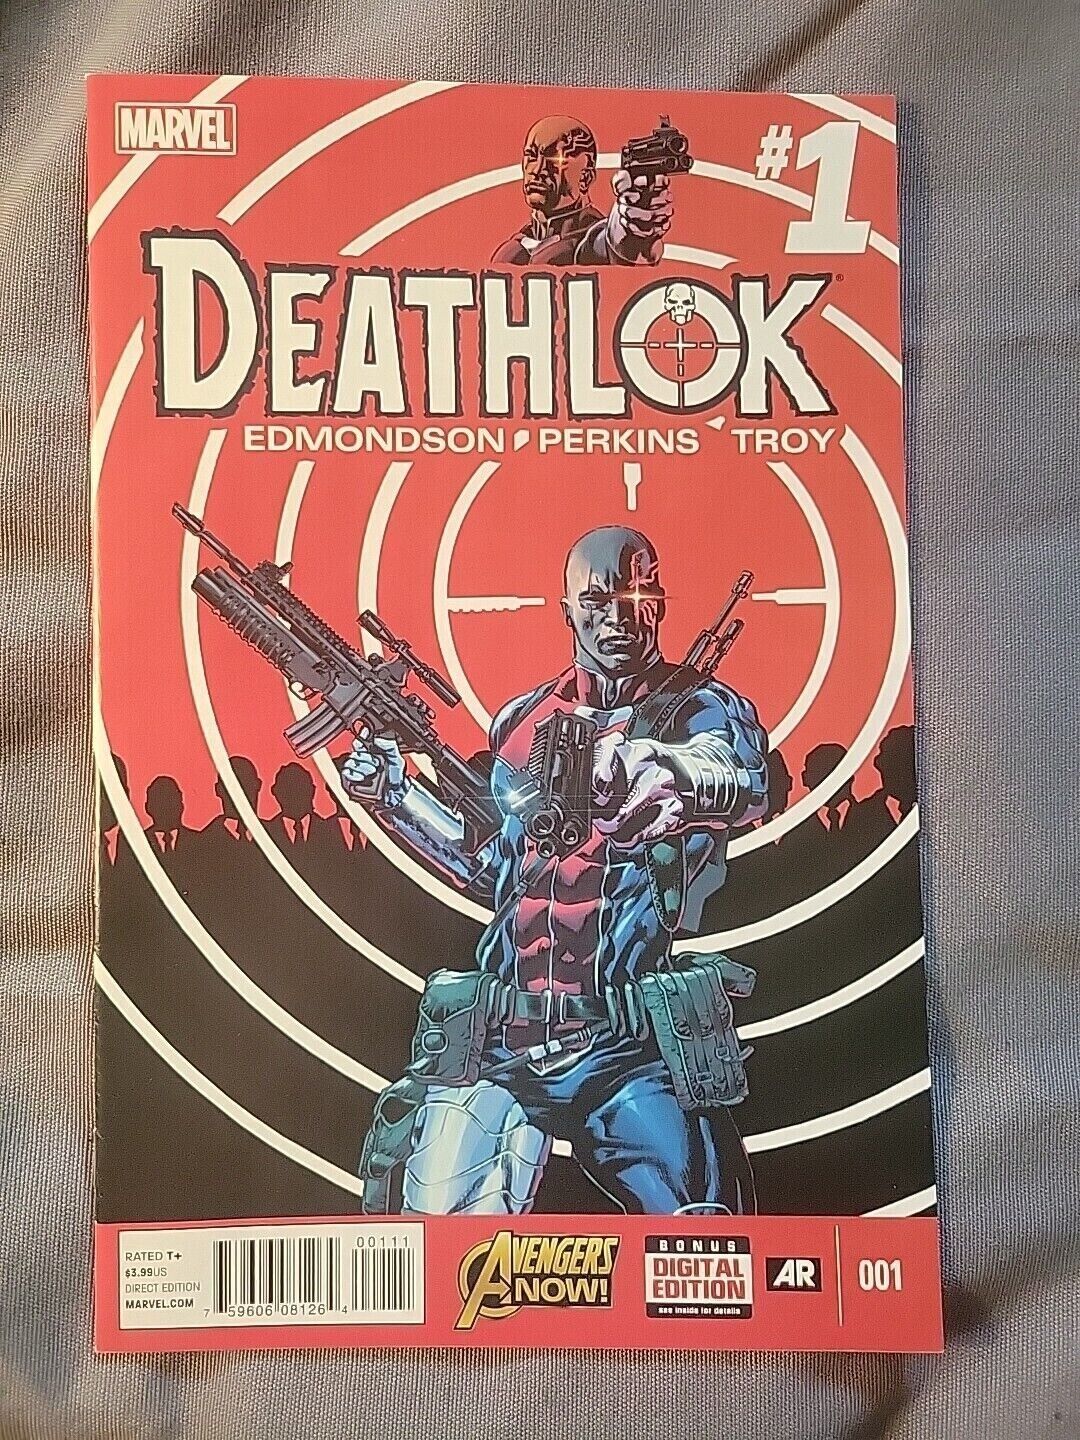 Deathlok #1 (Dec 2014, Marvel)Writer Nathan Edmondson Cover Artist: Mike Perkins